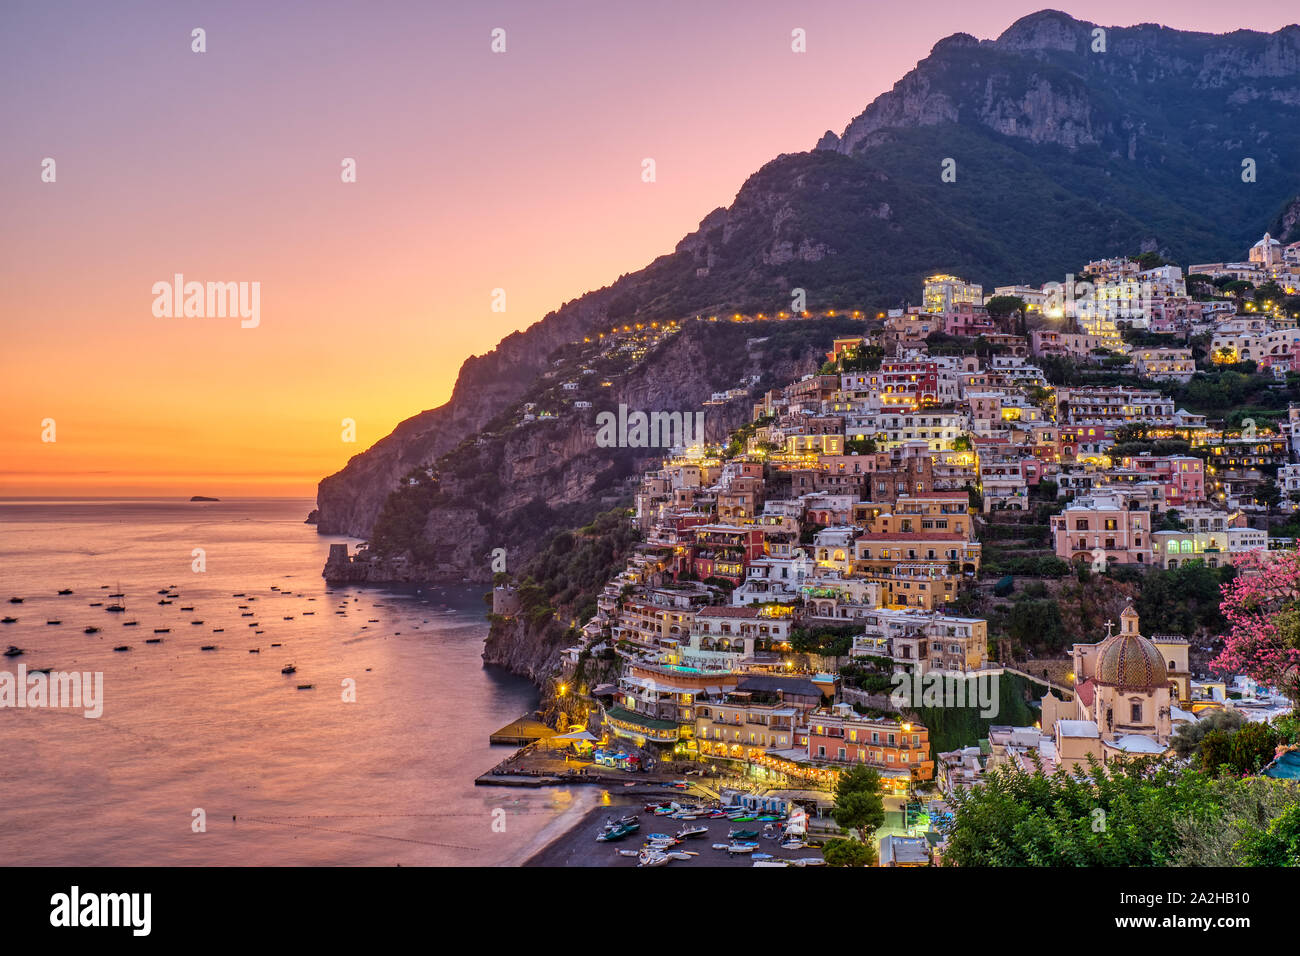 View of Positano on the italian Amalfi coast after sunset Stock Photo